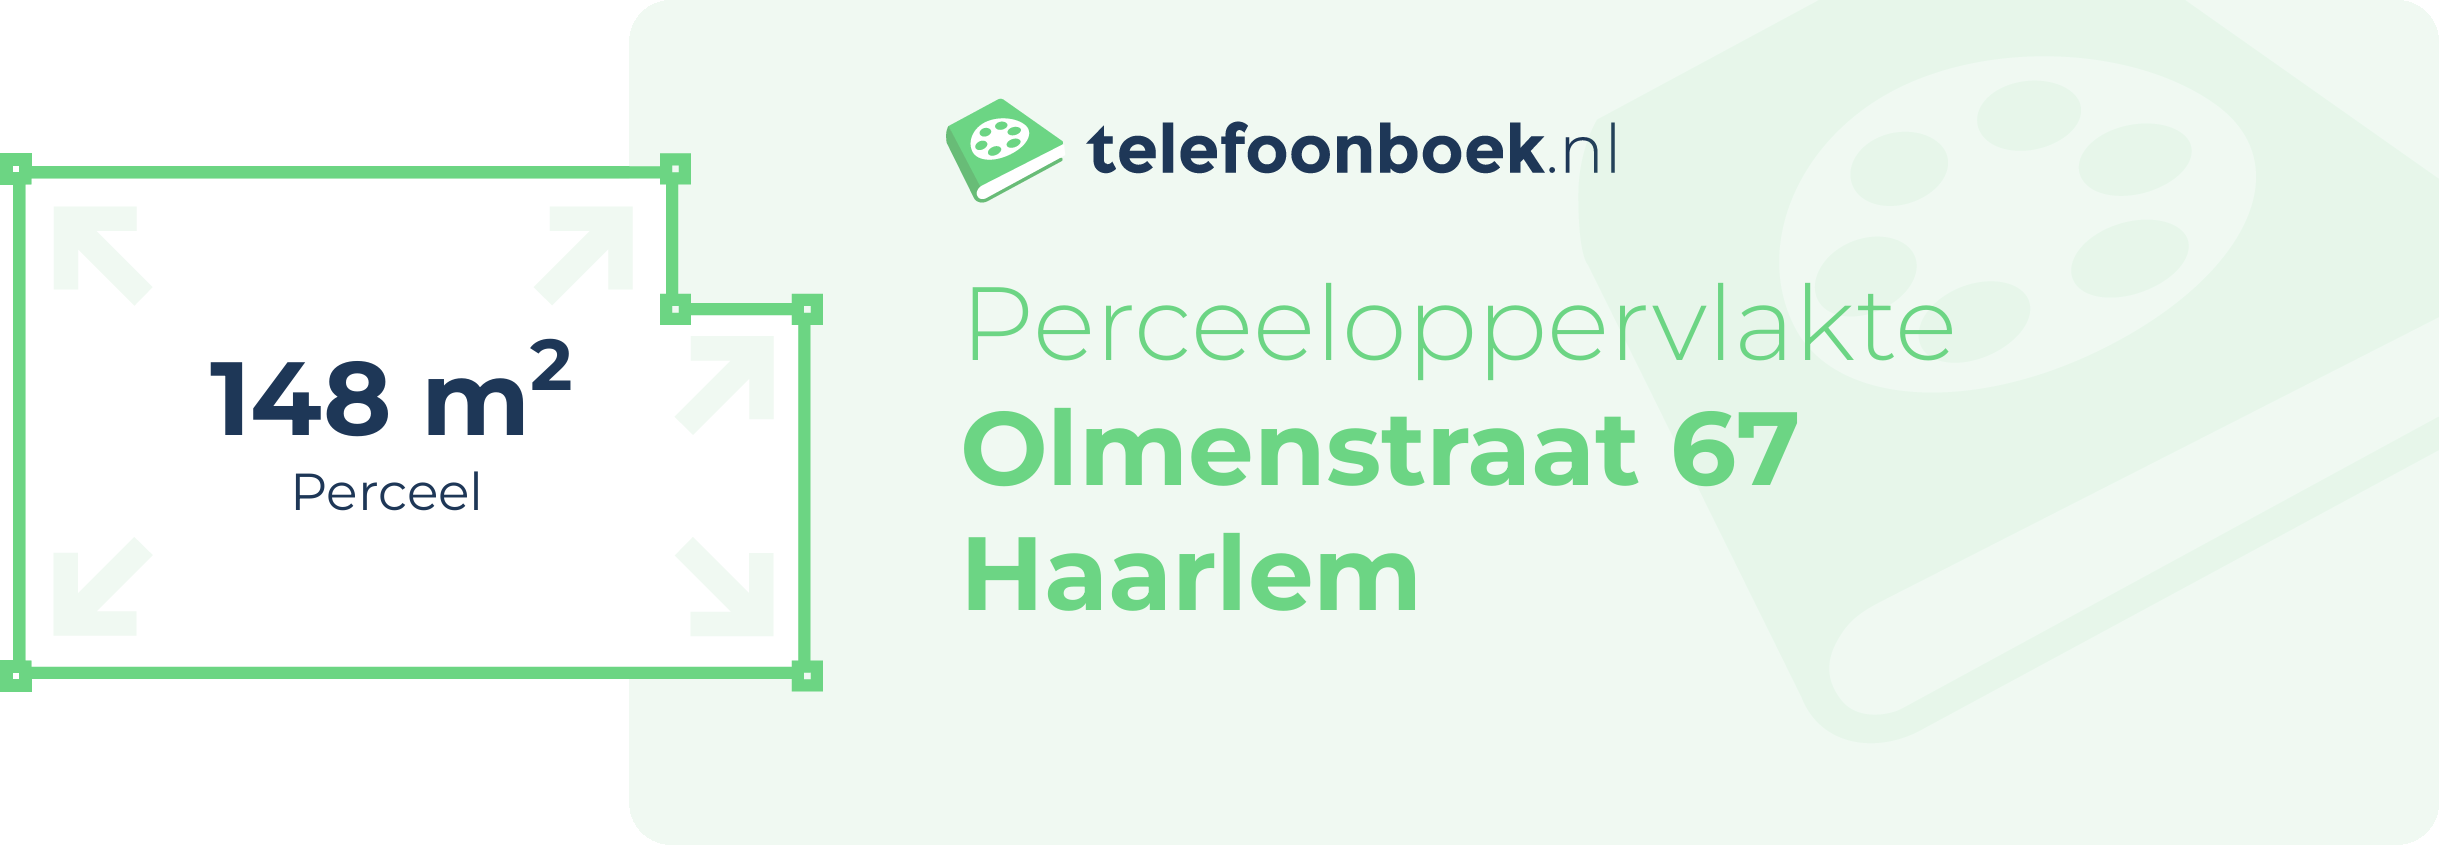 Perceeloppervlakte Olmenstraat 67 Haarlem